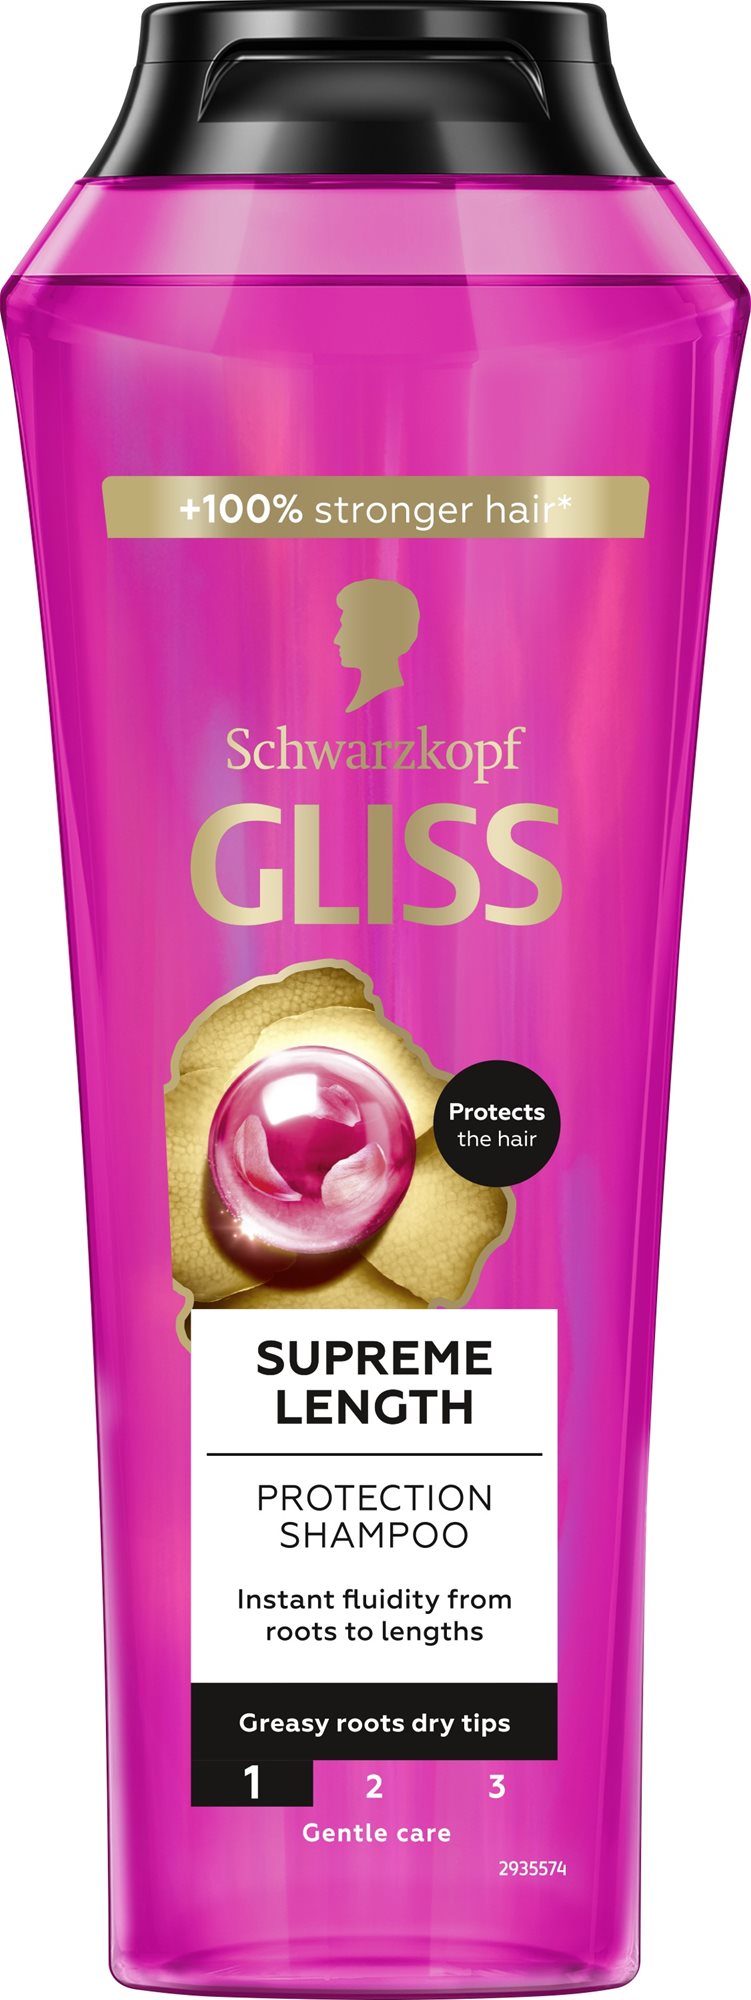 GLISS Shampoo Super Length 250 ml